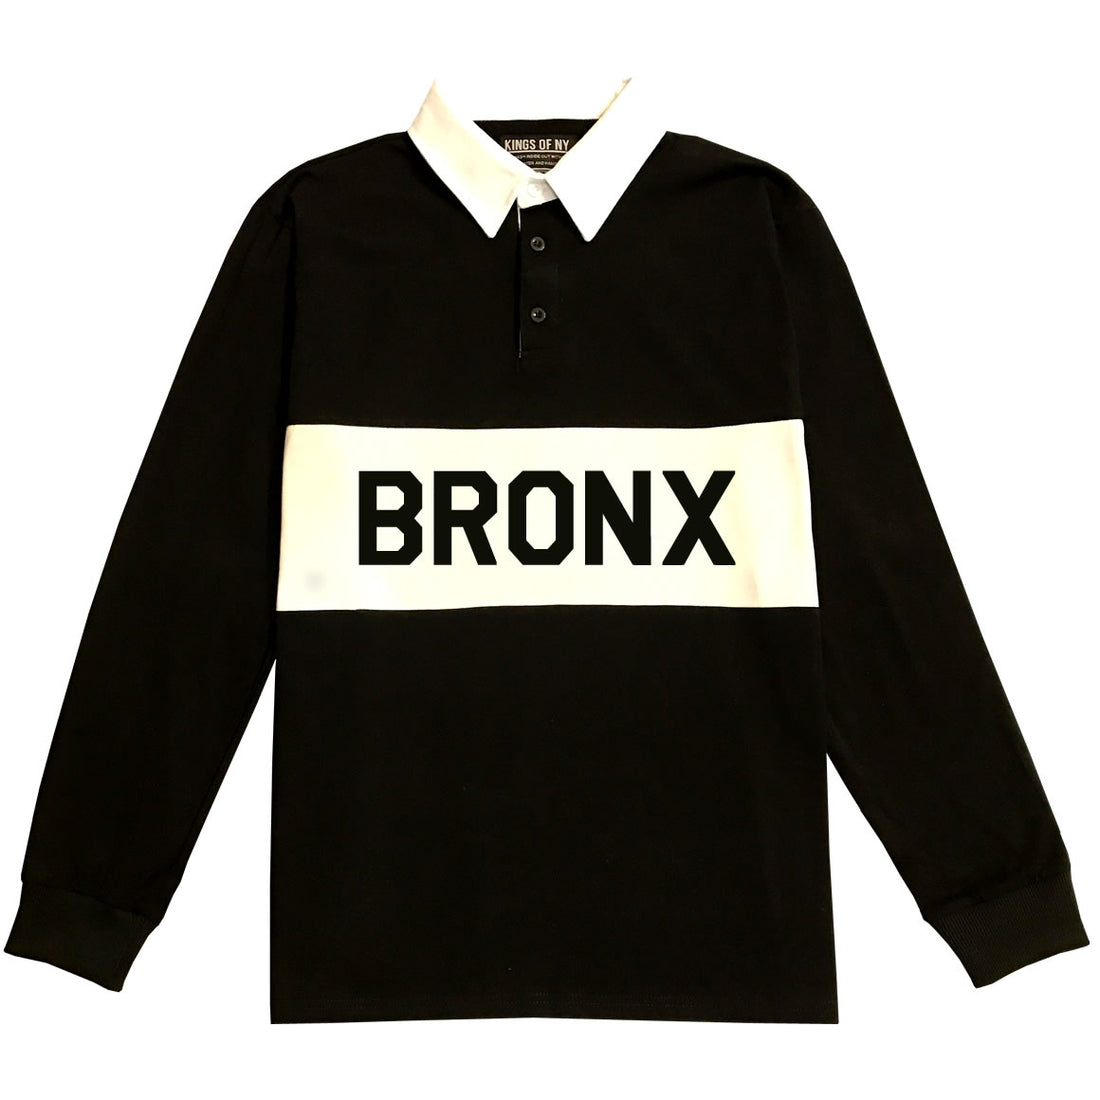 The Bronx New York Striped Mens Long Sleeve Rugby Shirt Black